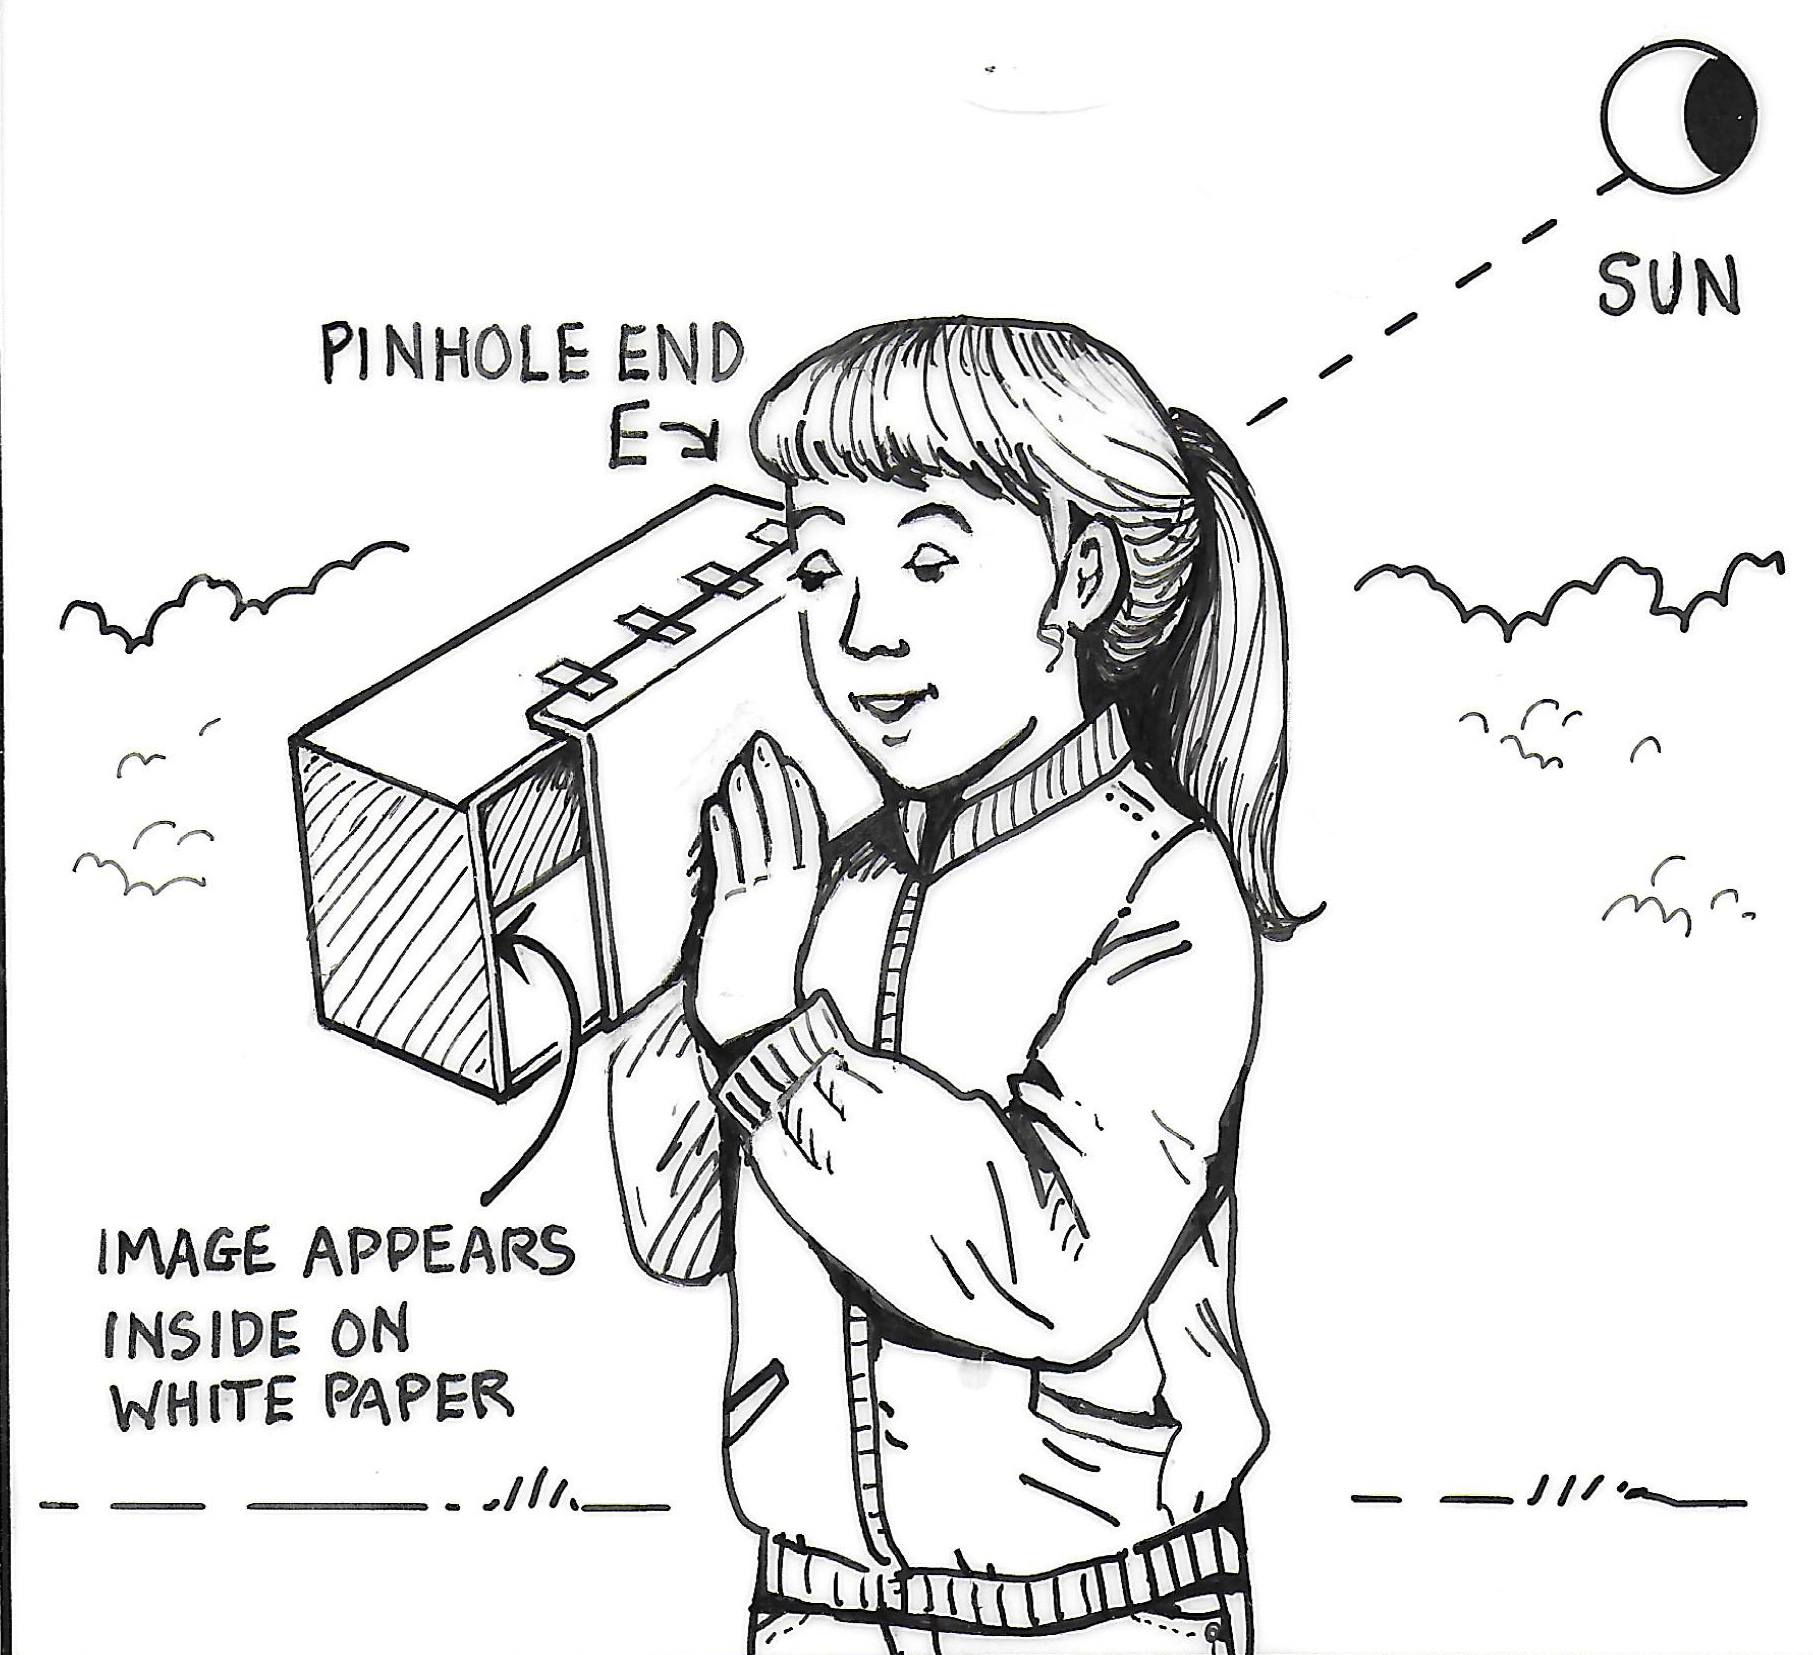 Using the shoebox solar projector